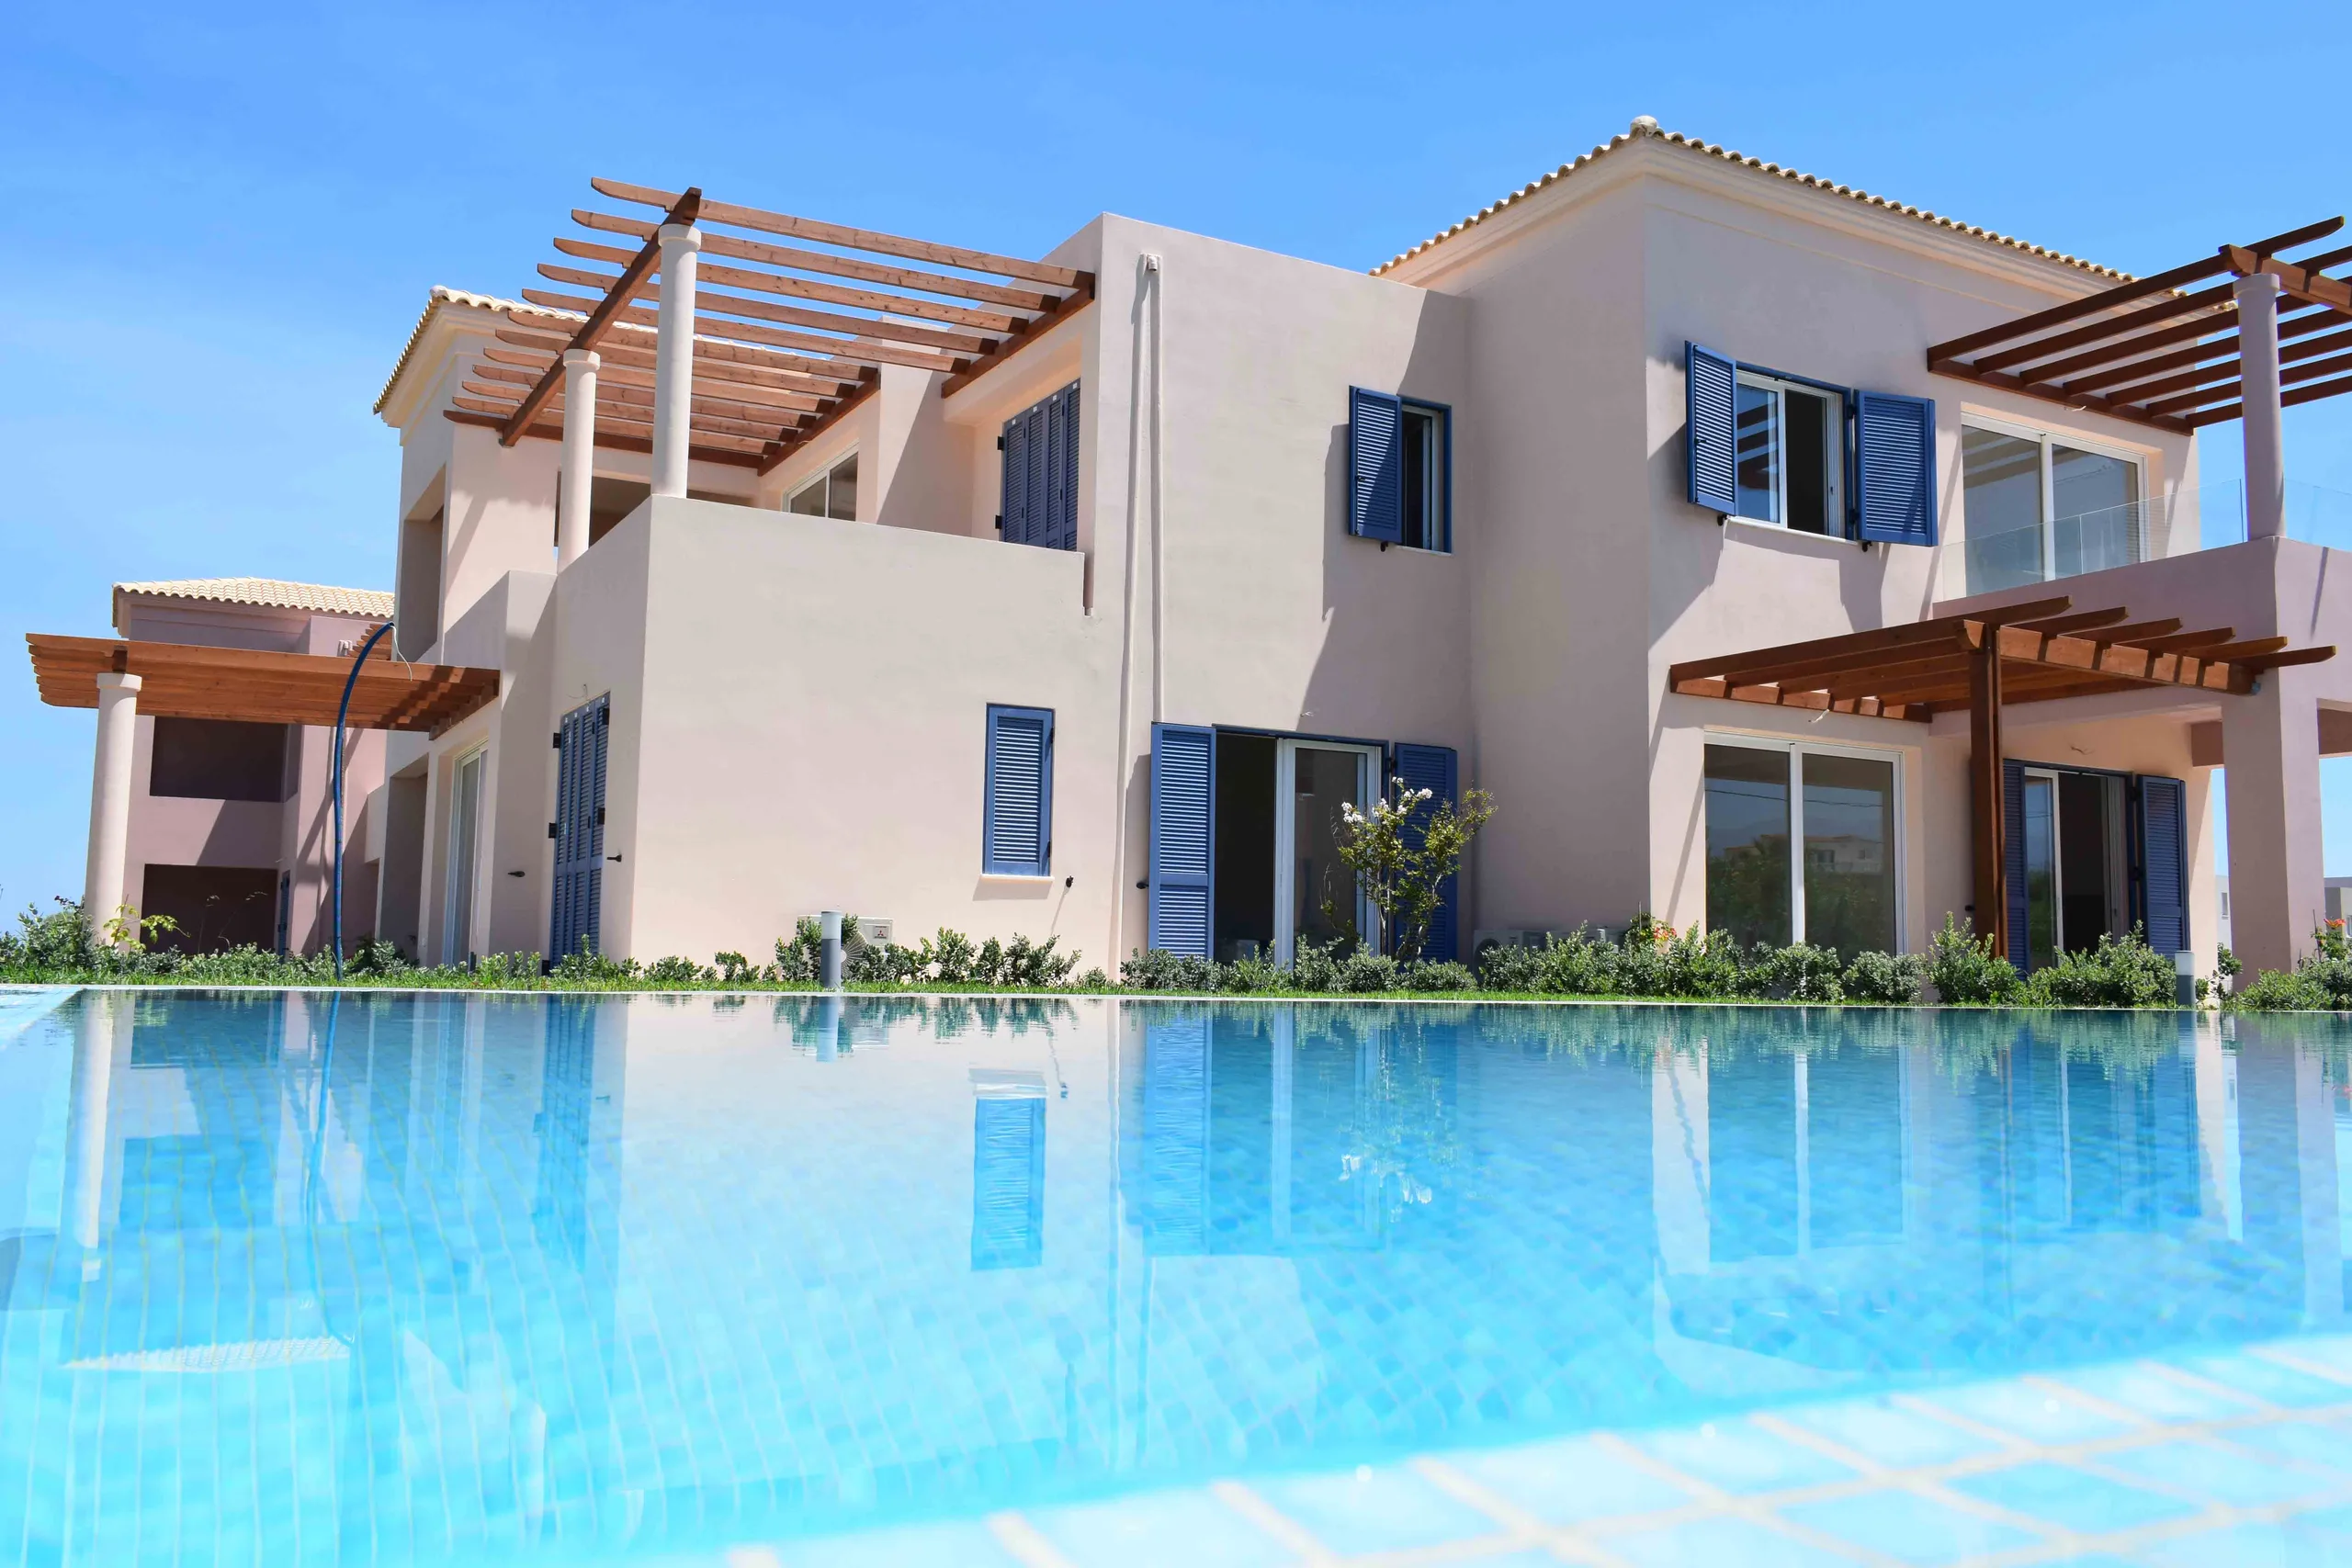 Acropolis Homes - Aegean Blue Apartments - Immobilienagentur - Immobilienfoto - Schwimmbad